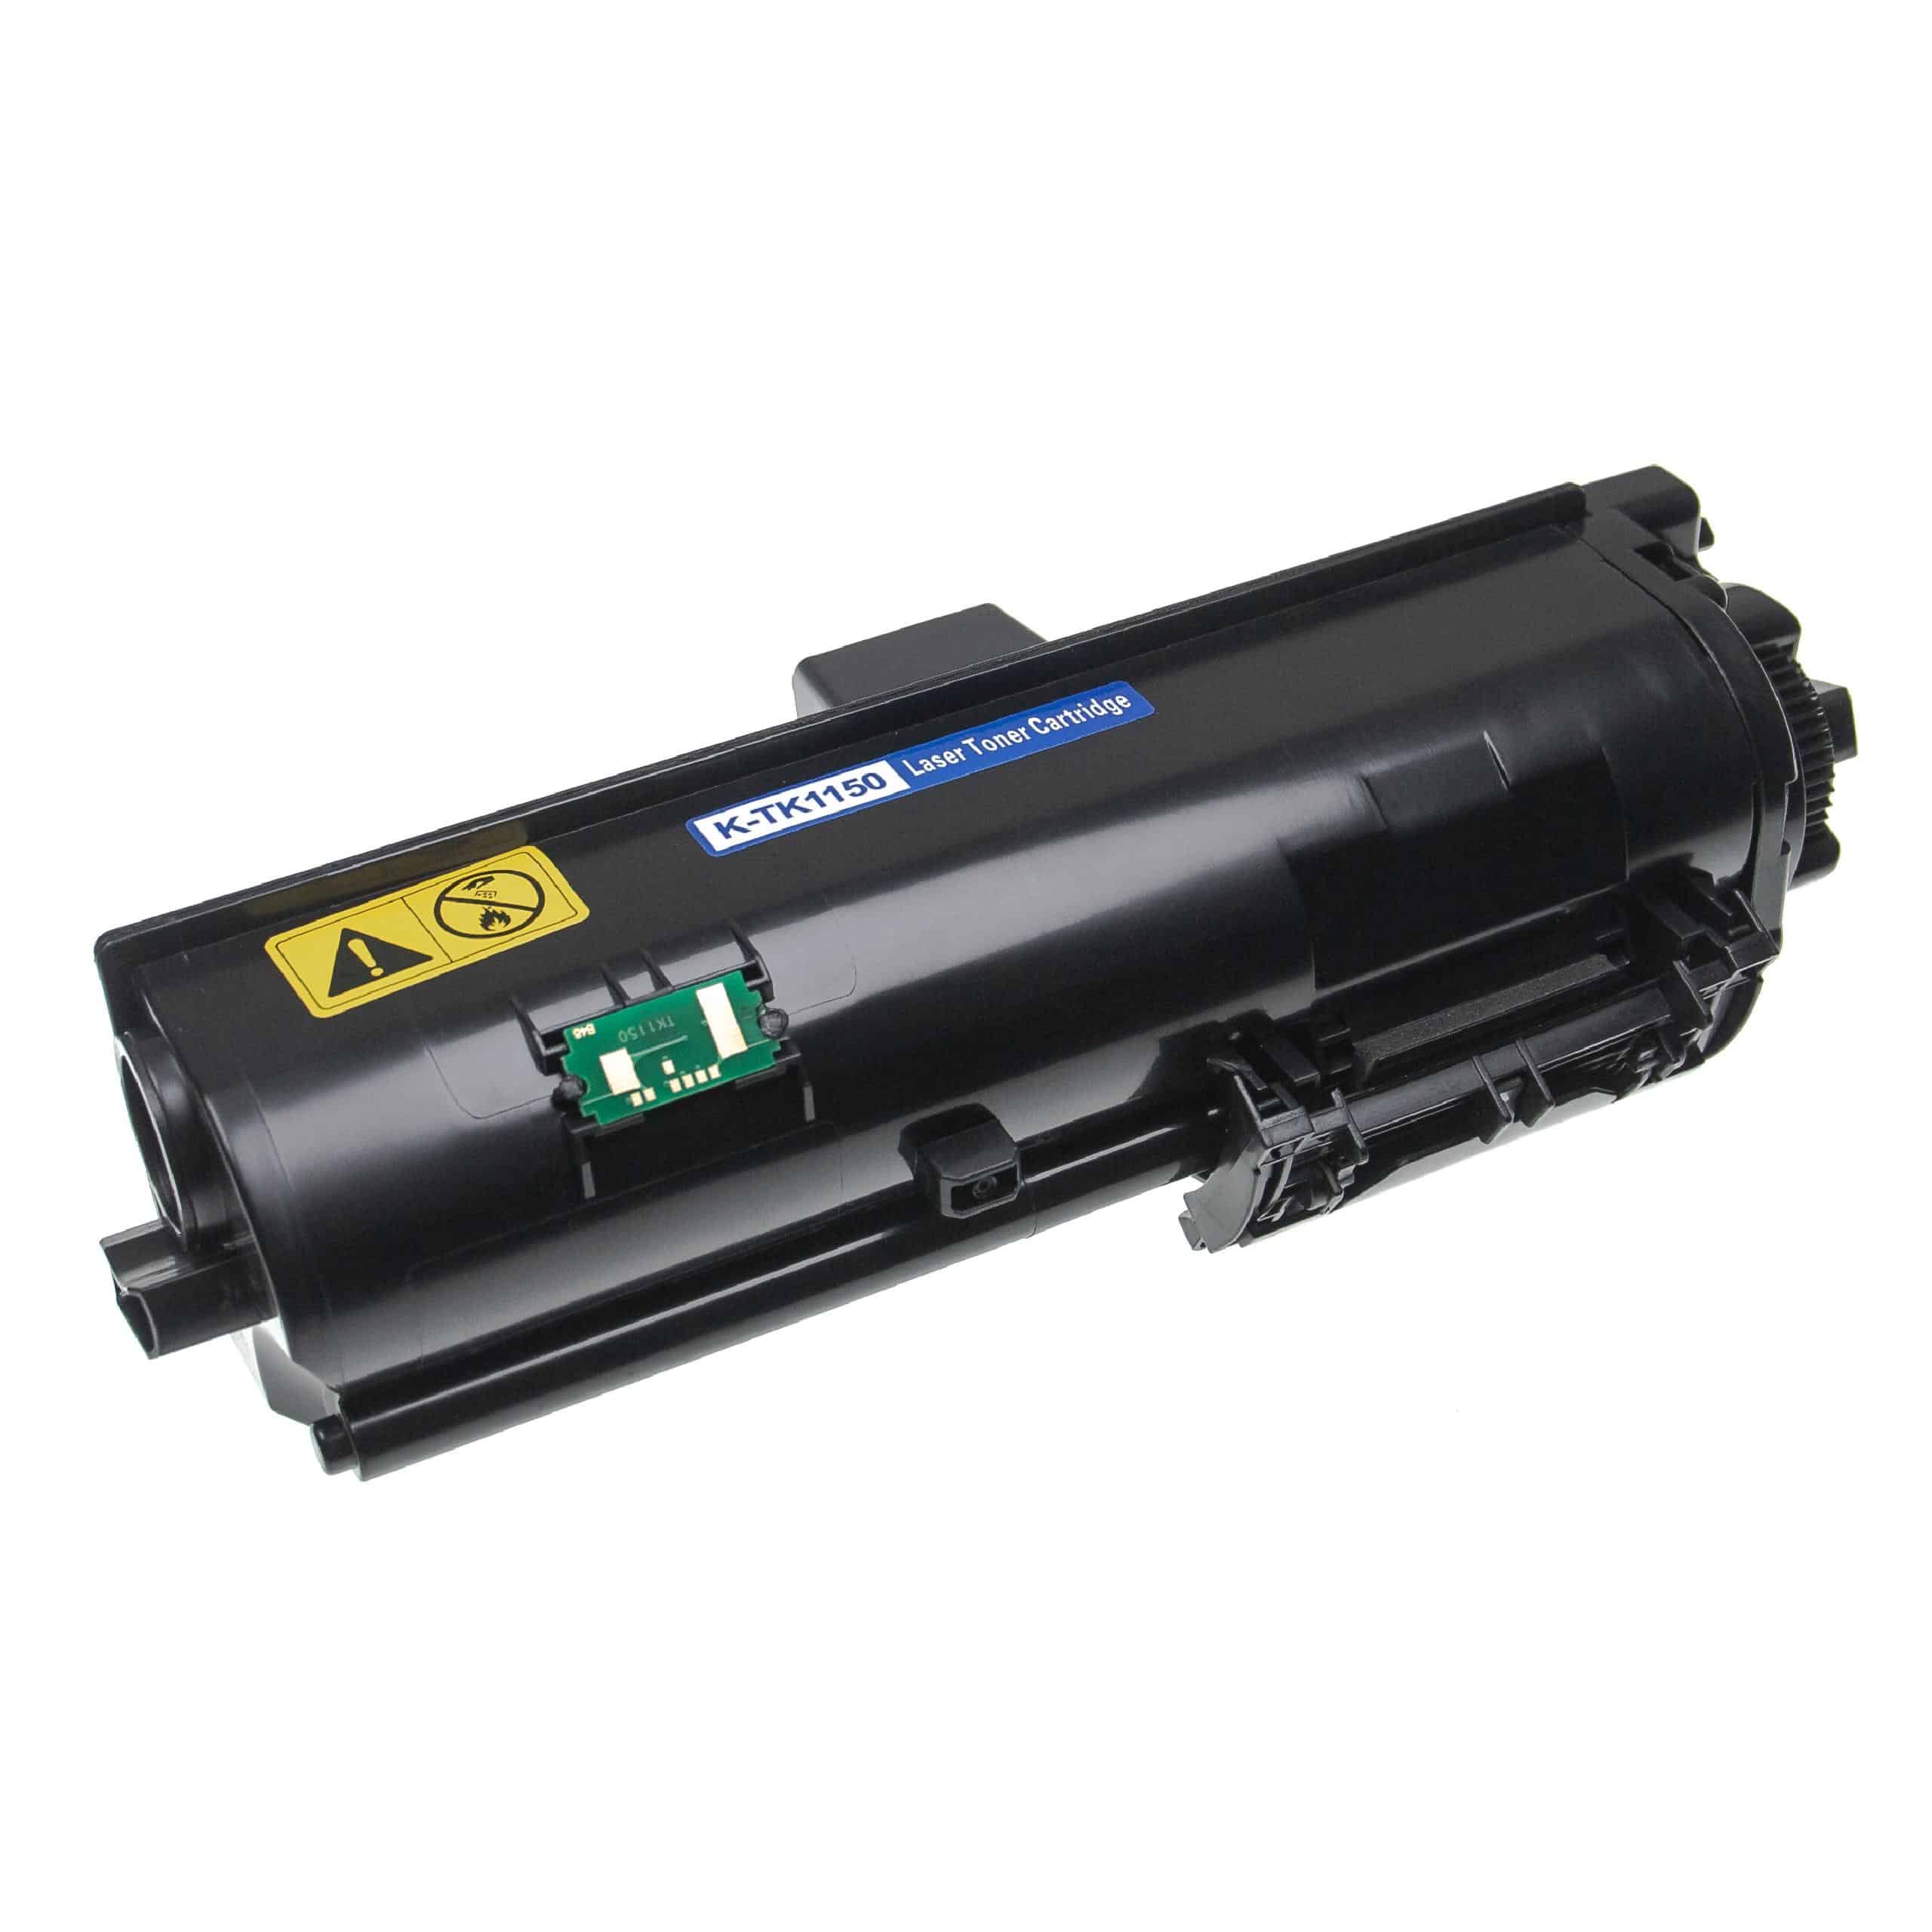 Toner replaces Kyocera TK-1150 for Kyocera Printer, Black